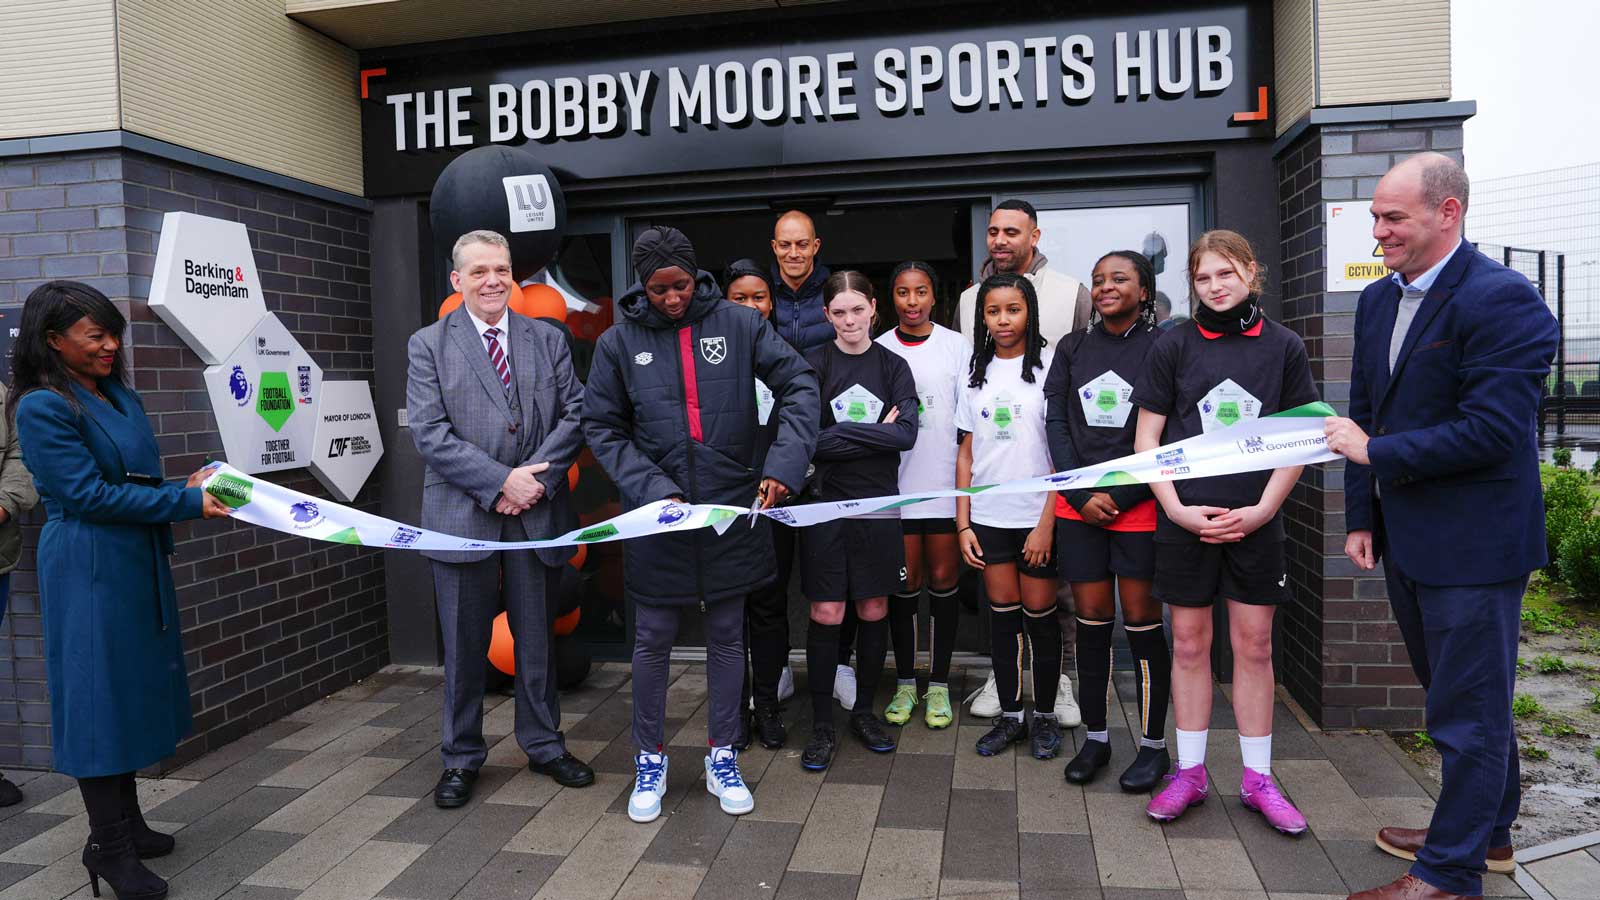 Hawa Cissoko cuts the ribbon to open the Bobby Moore Sports Hub